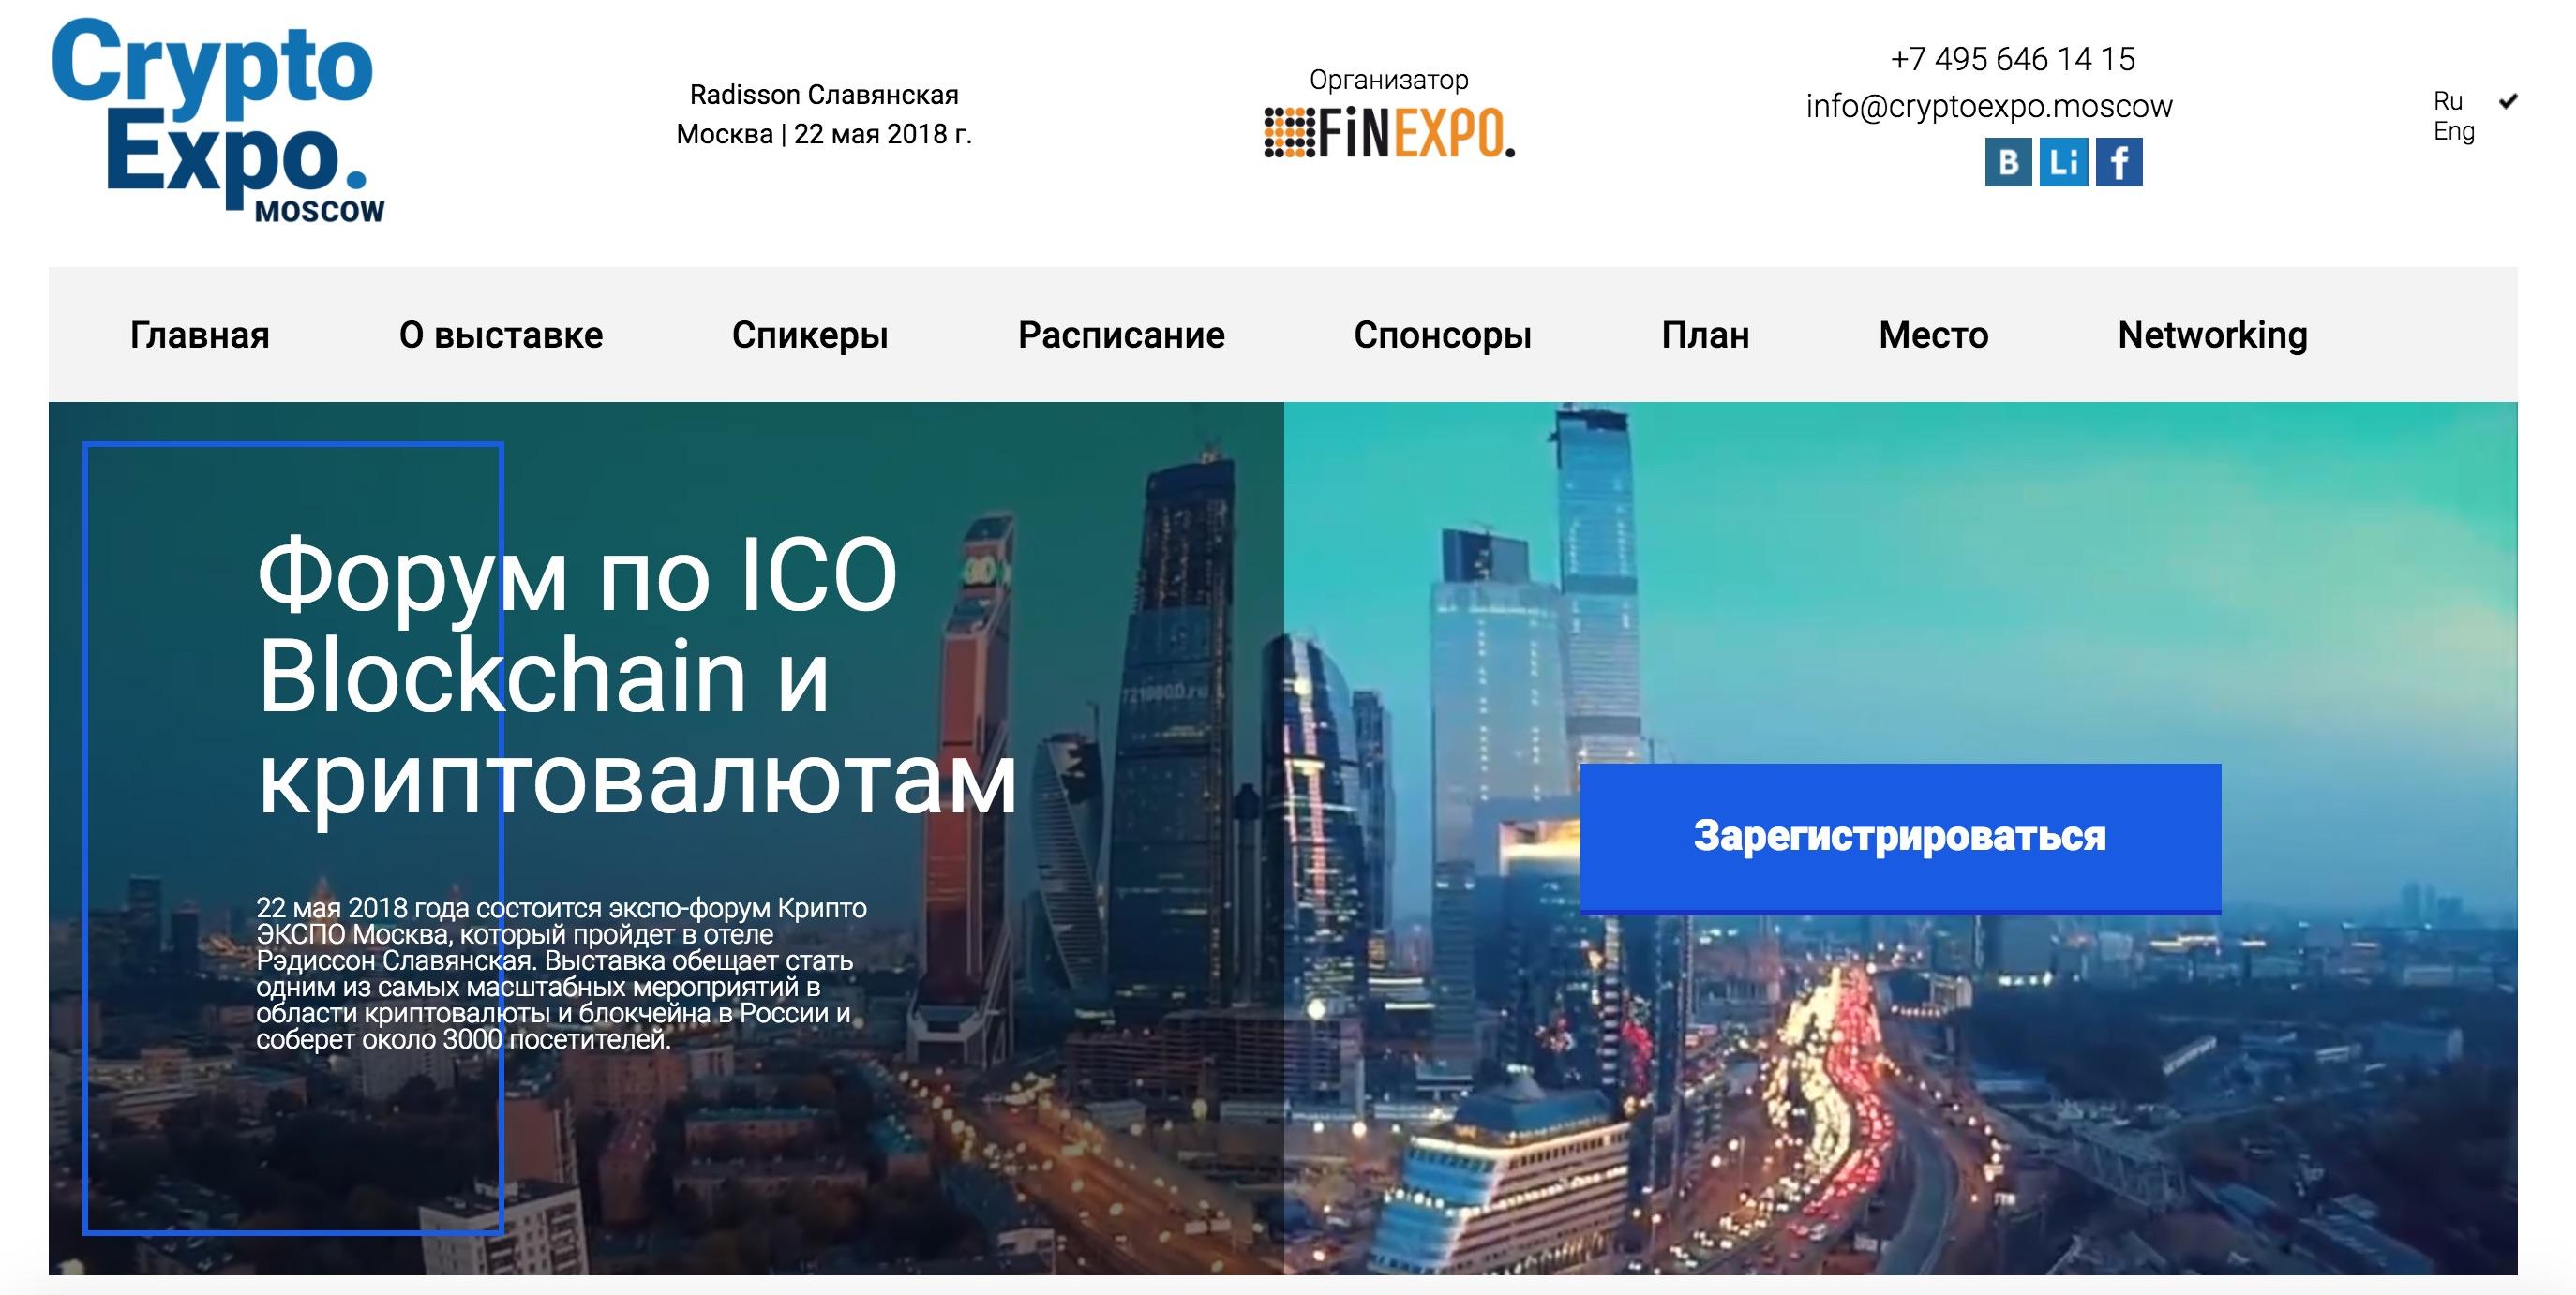 Crypto Expo Moscow 2018